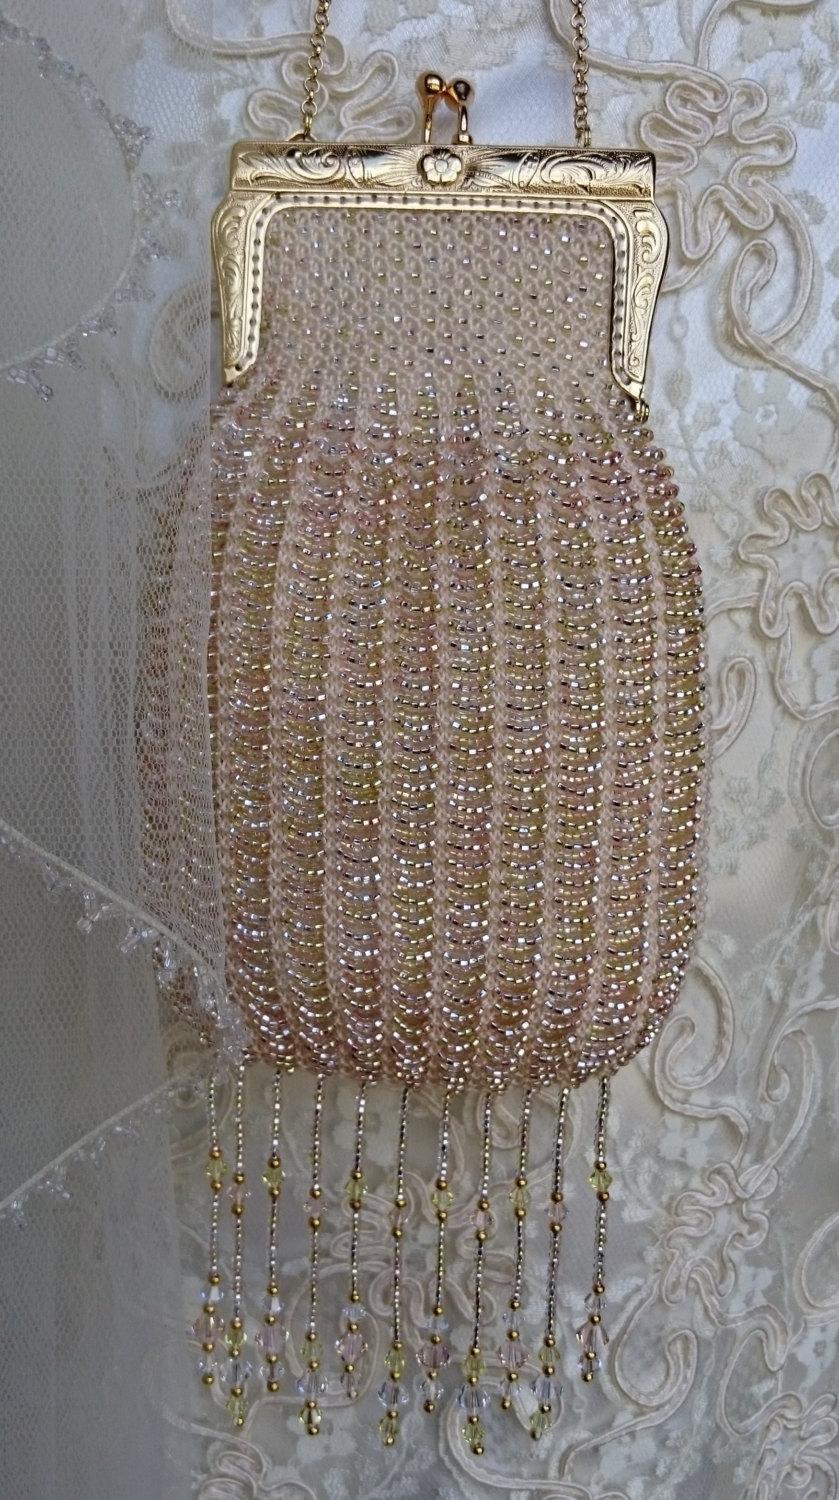 زفاف - SALE - Wedding Purse, Beaded Bridal Purse, Unique Bridal Purse, Bead Knitted Purse, Handmade, Czech Beads, Swarovski Crystals